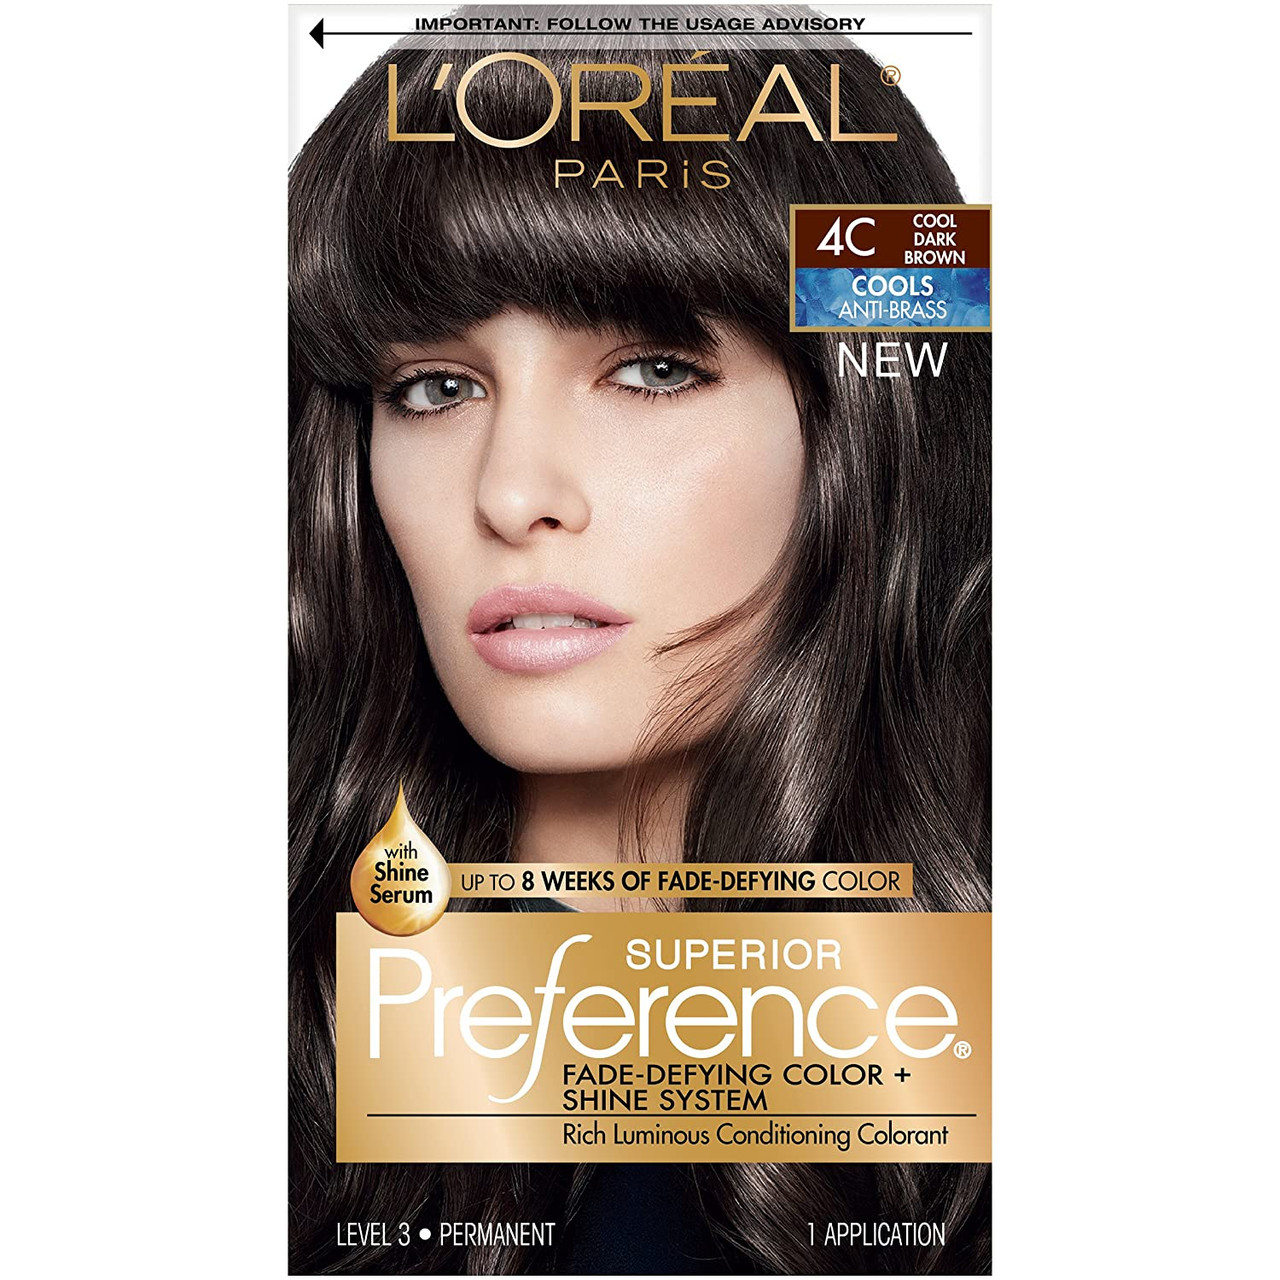 L'Oreal Paris Superior Preference 7 Dark Blonde Permanent Hair